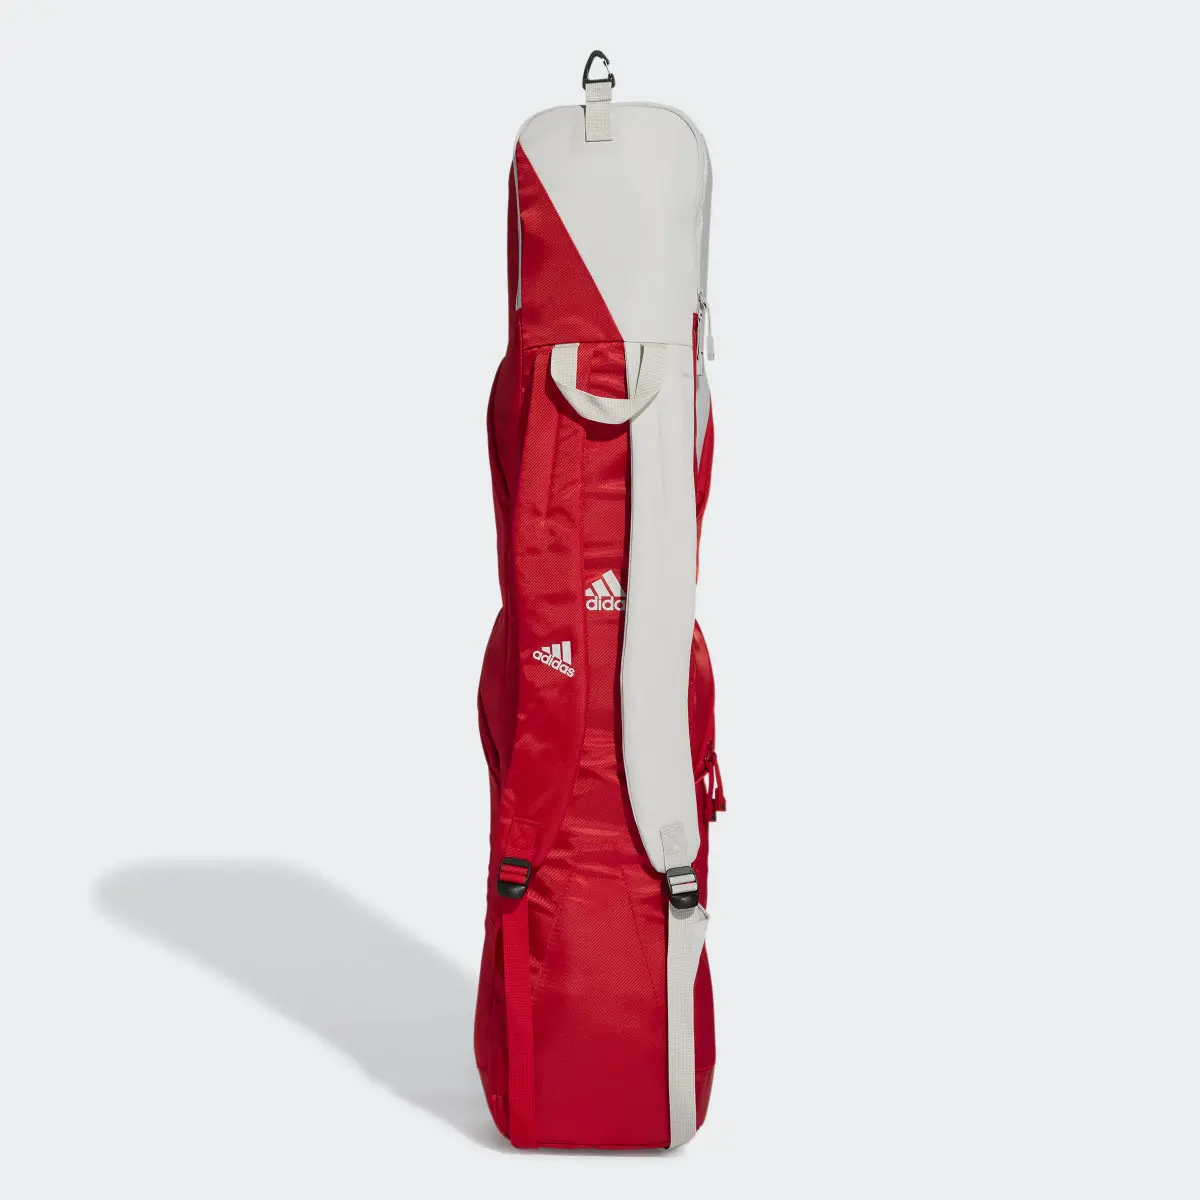 Adidas VS.6 Red/Grey Hockey Stick Bag. 3